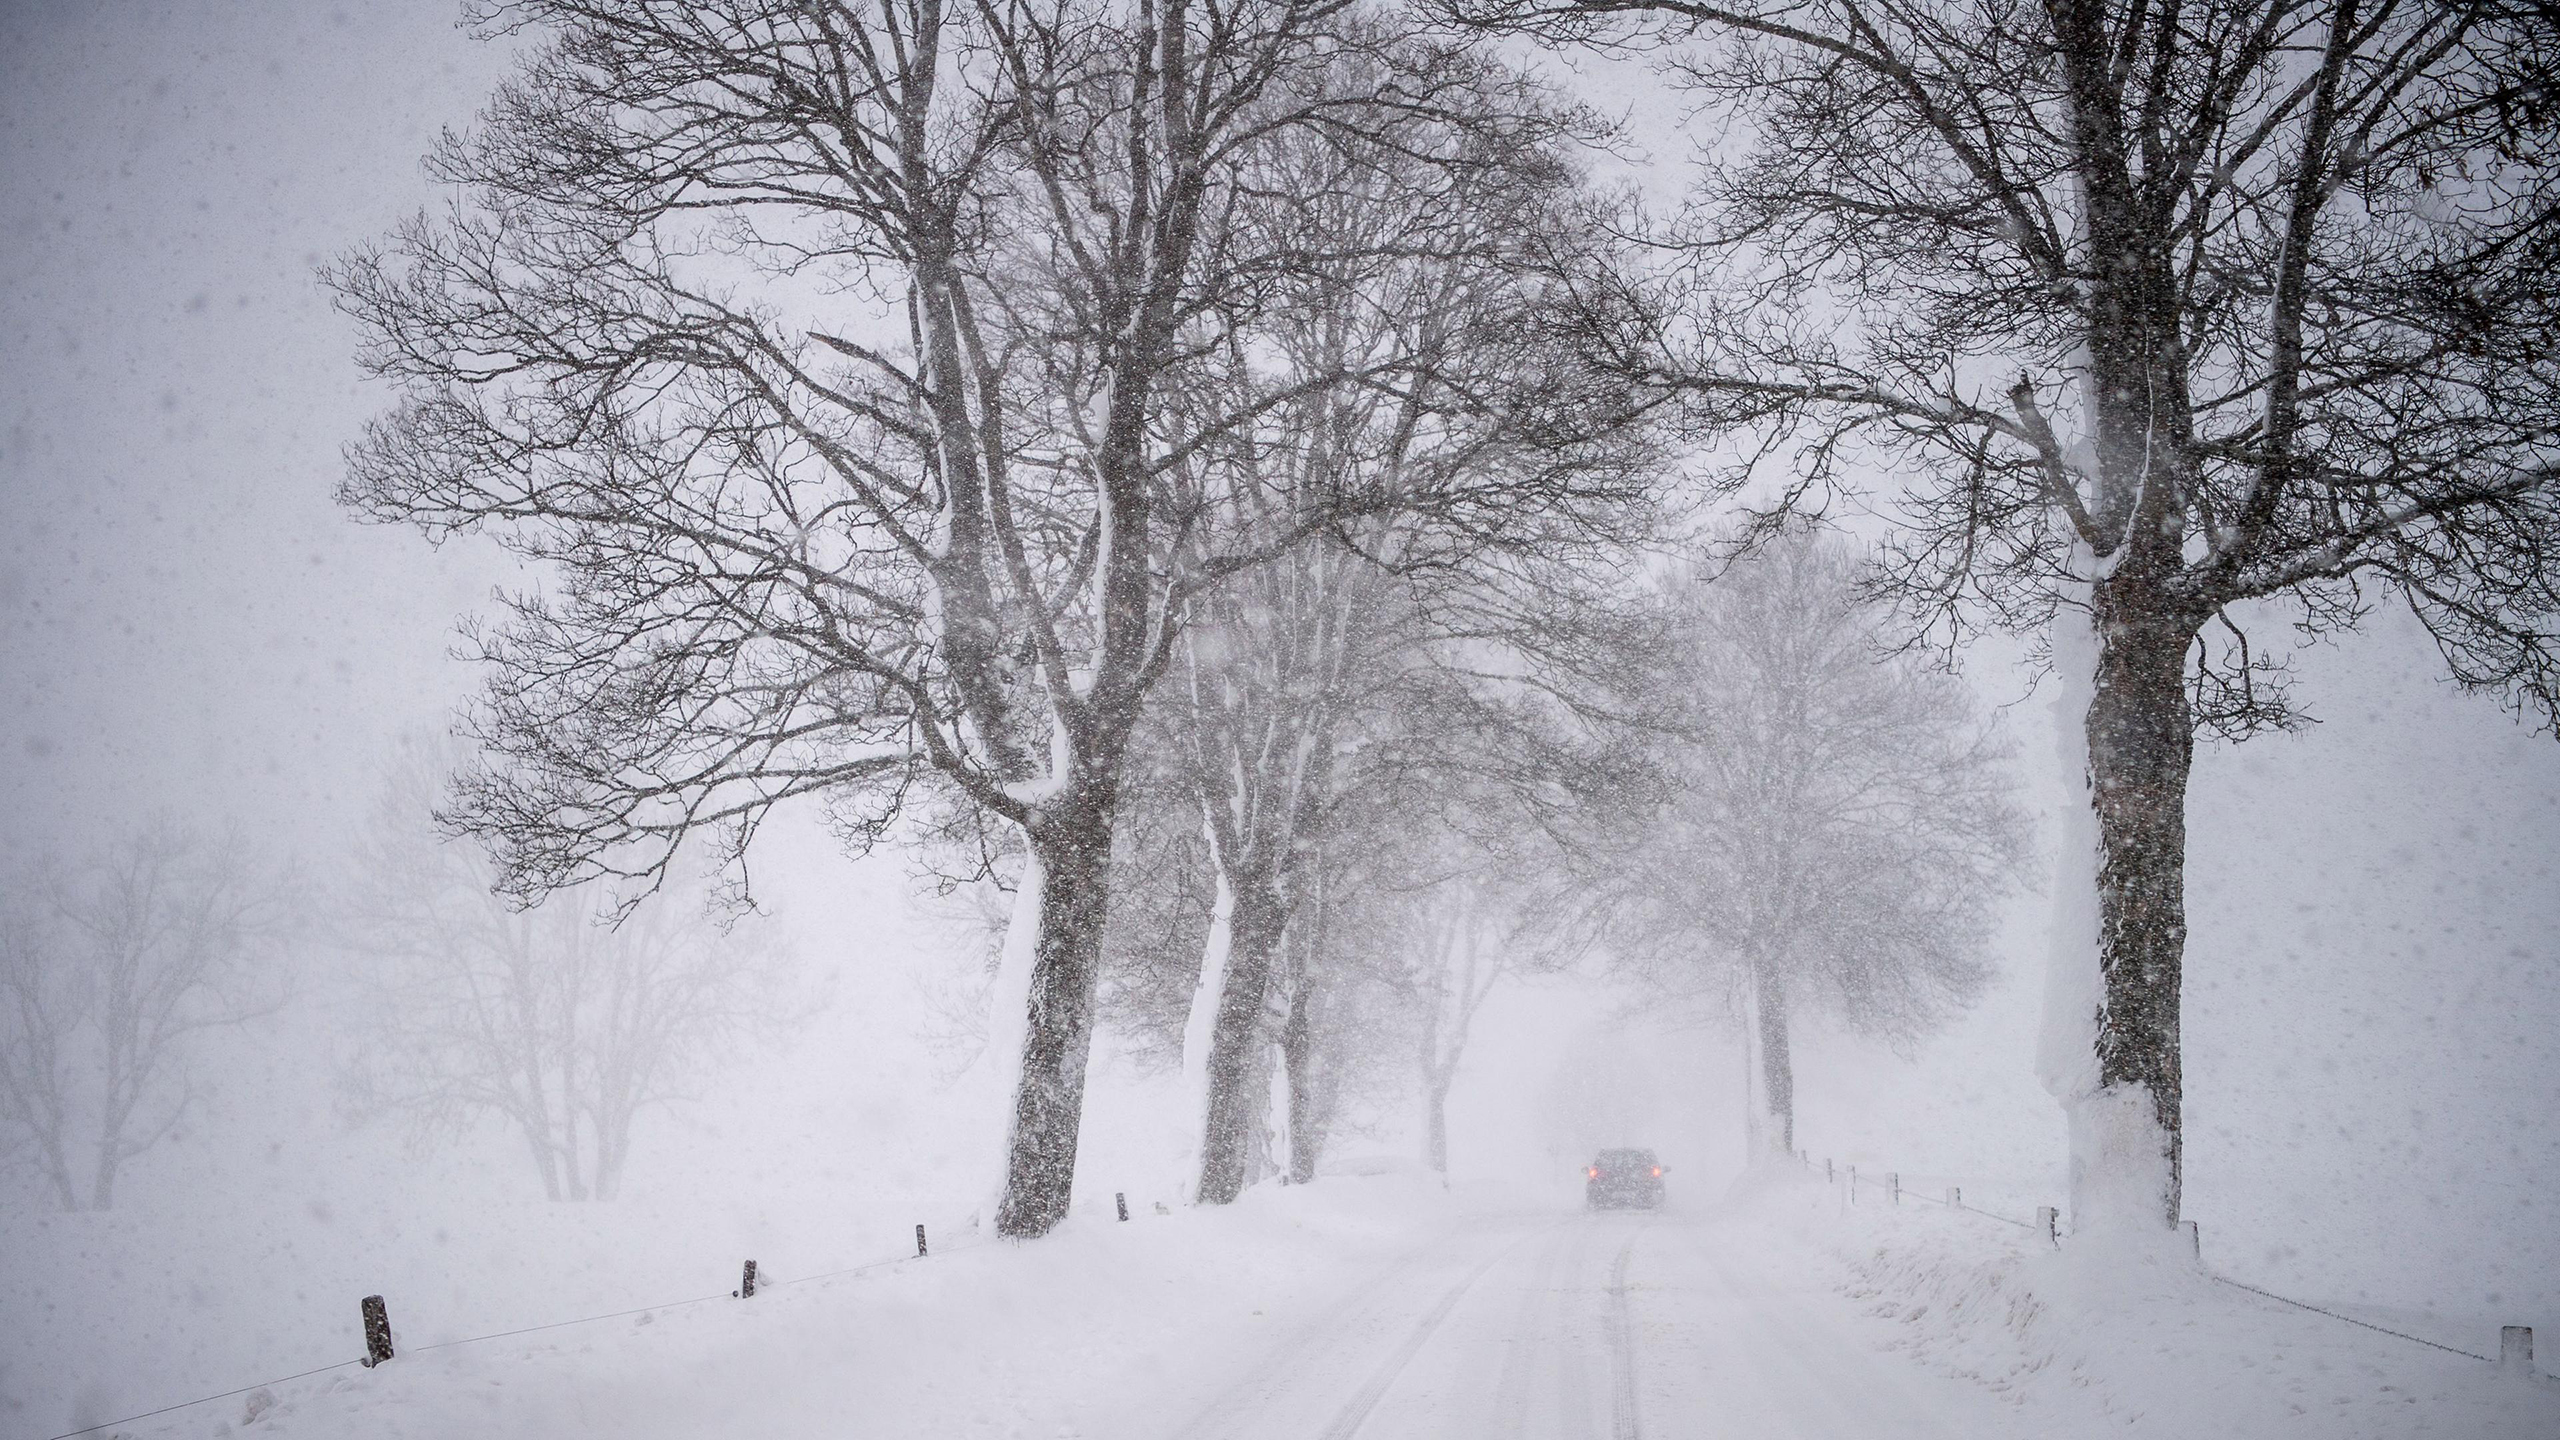 General 2560x1440 road snow winter storm trees car nature landscape